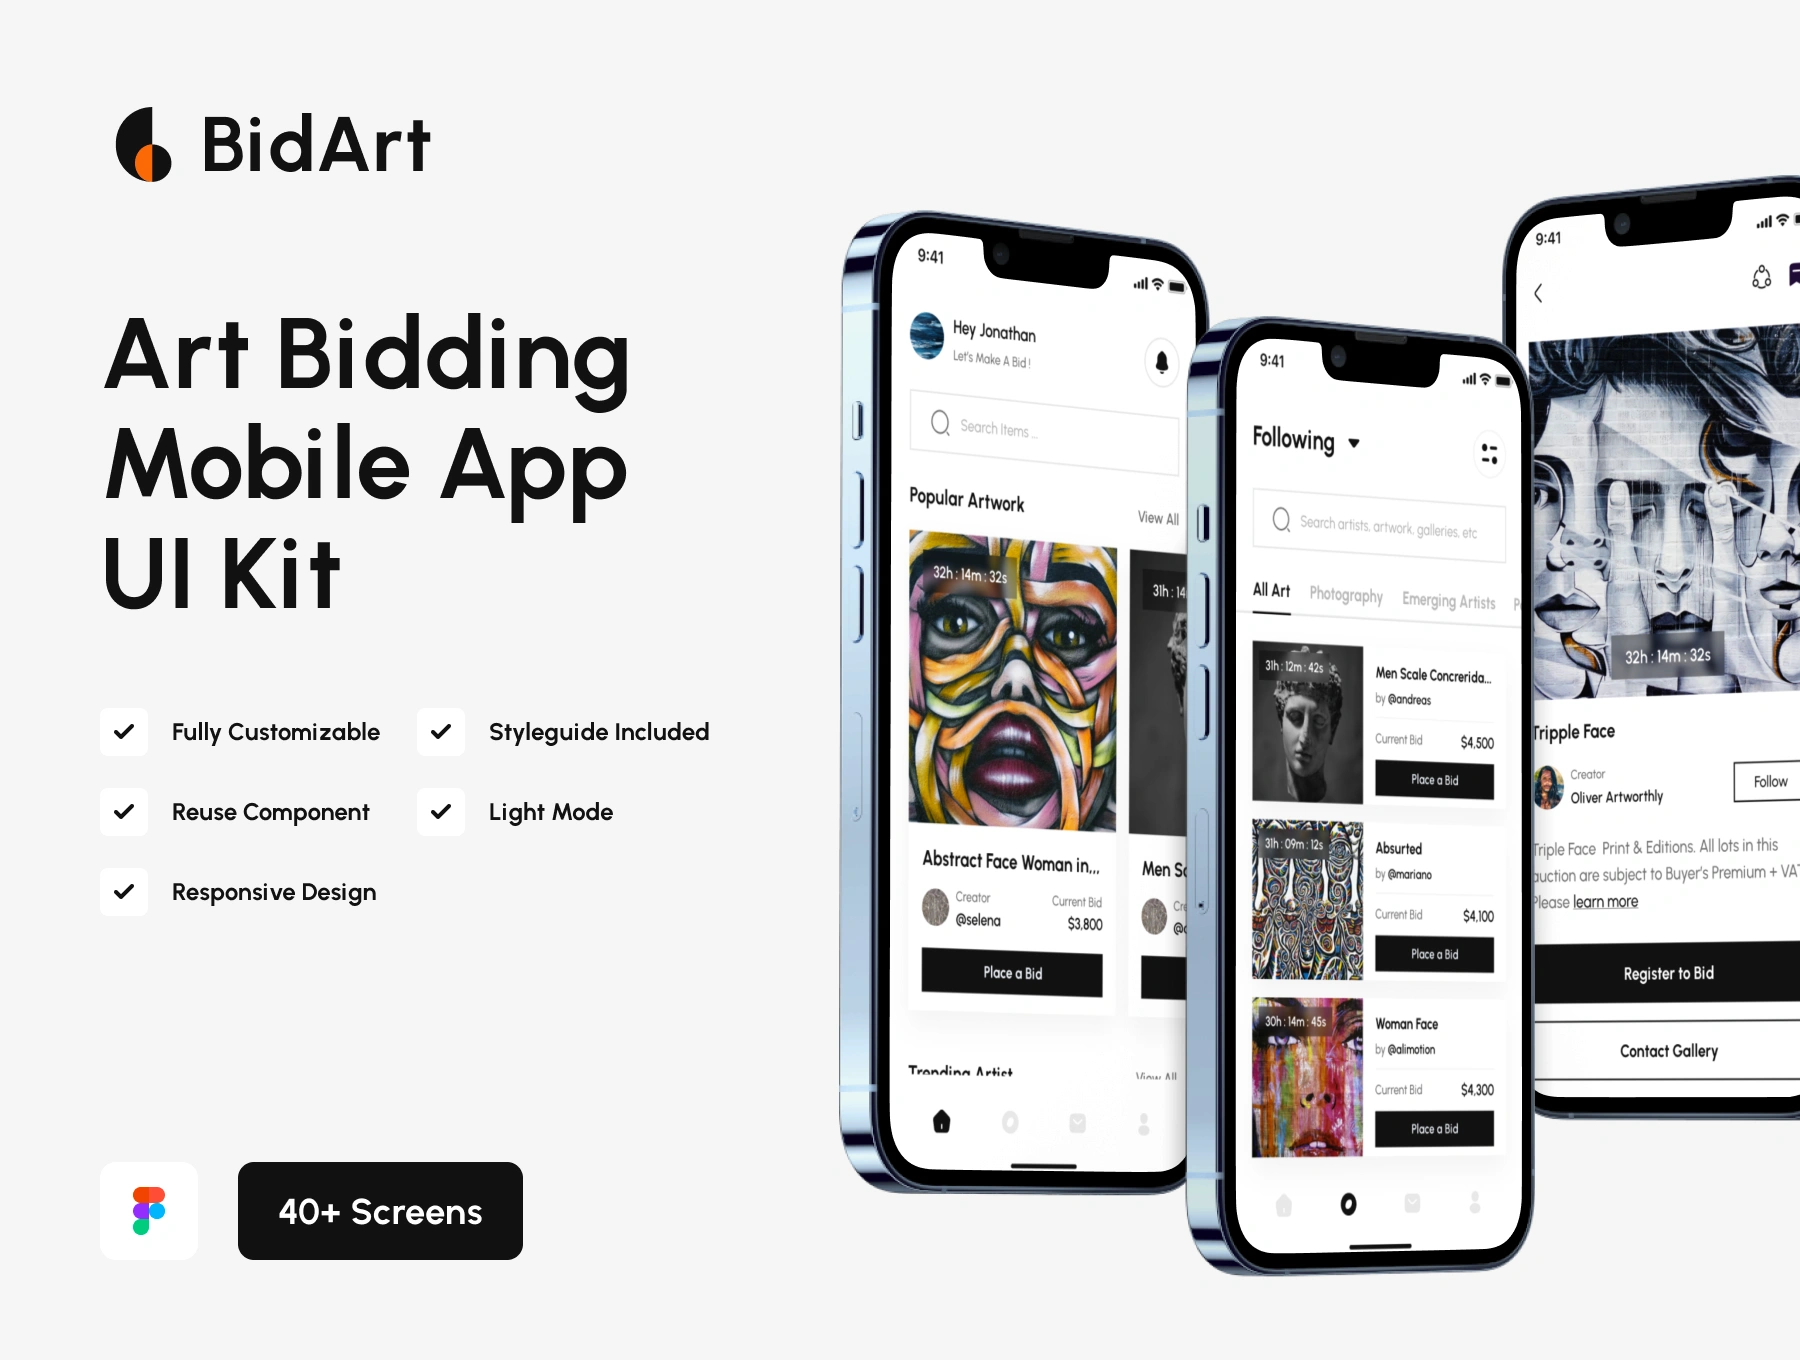 [VIP] BidArt: Art Bidding Mobile App UI Kit